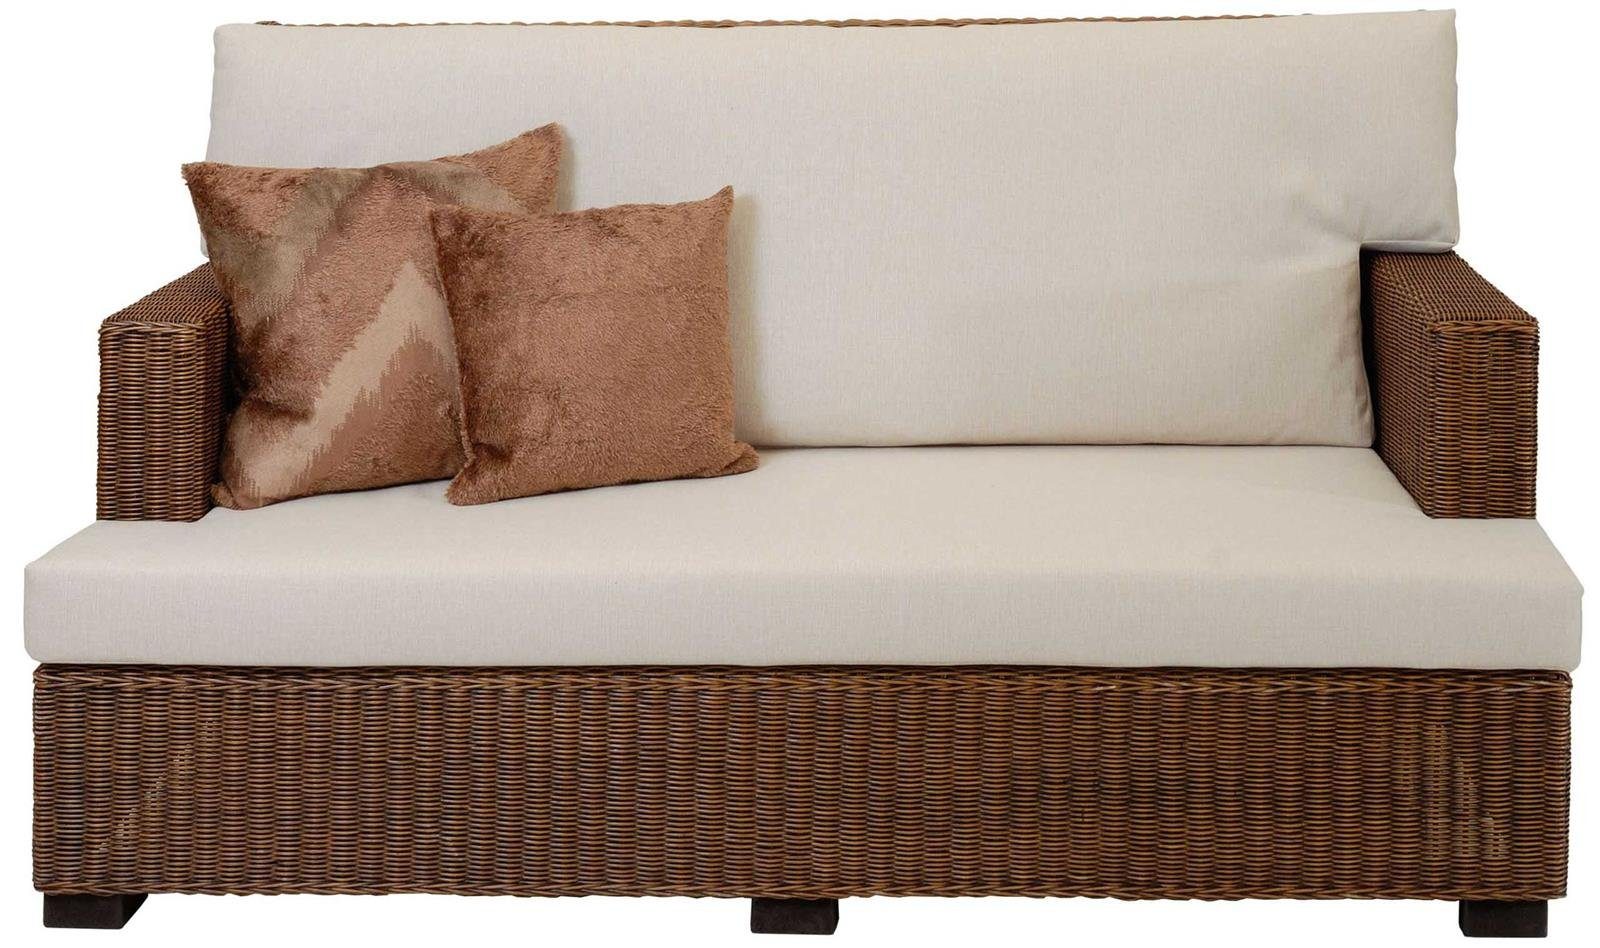 Vintage Wohnzimmer Farbe inkl. in Couch Wohnzimmer Polster, Loungesofa Krines Rattan-Sofa Home Couch Braun Rattan-Sofa inkl. Polster der Braun Farbe in der Vintage